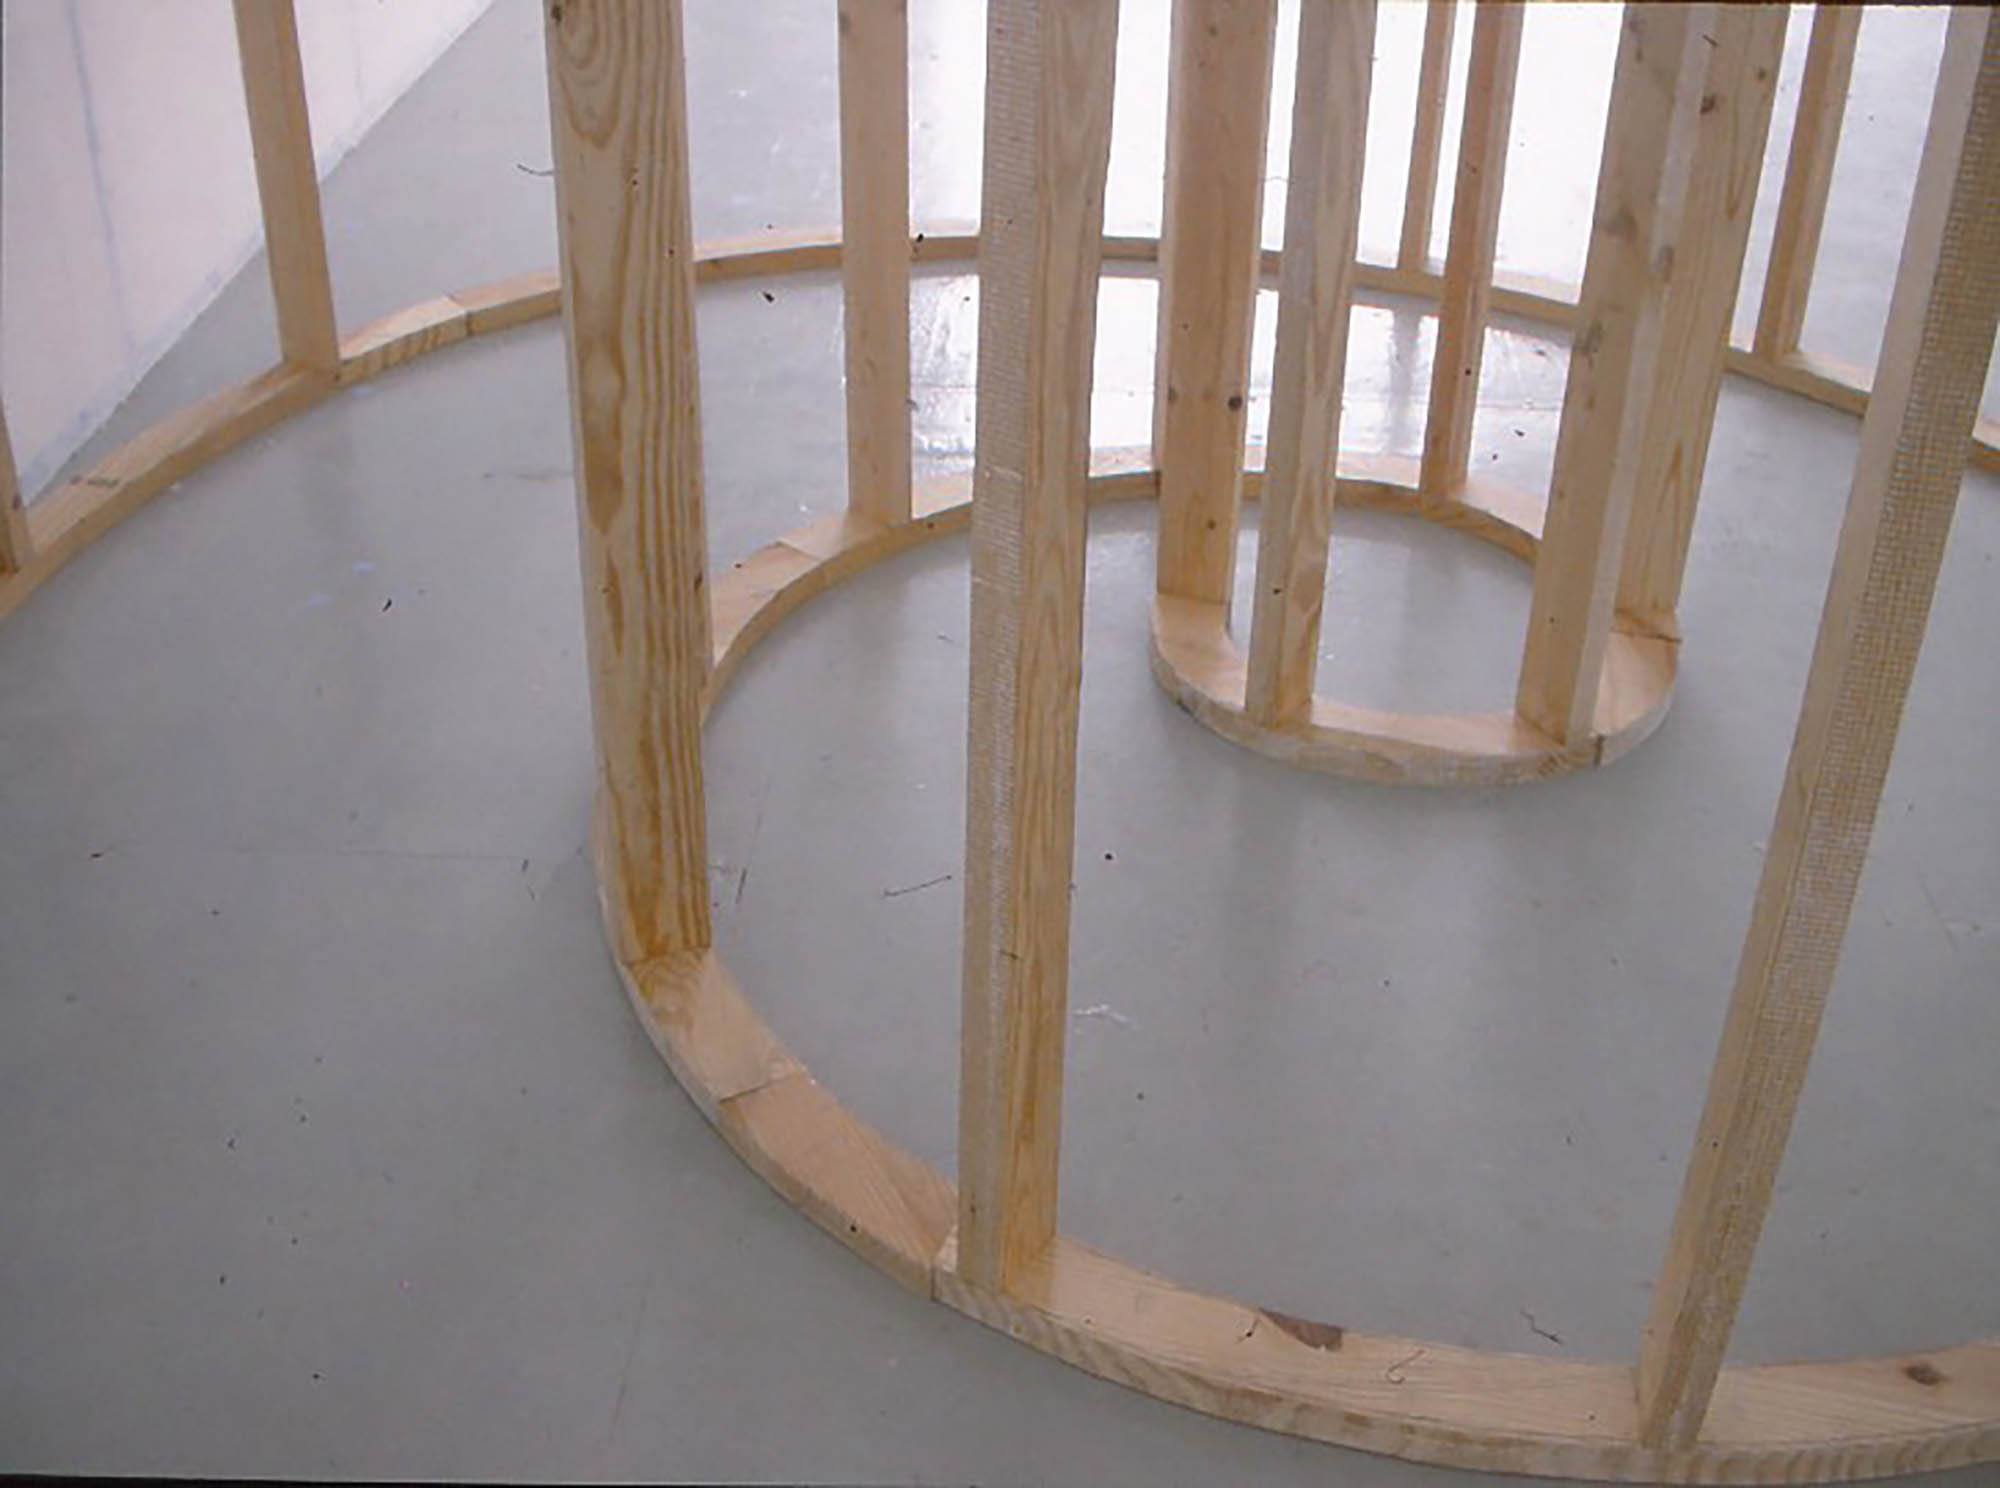 Installation image of a spiral wood frame